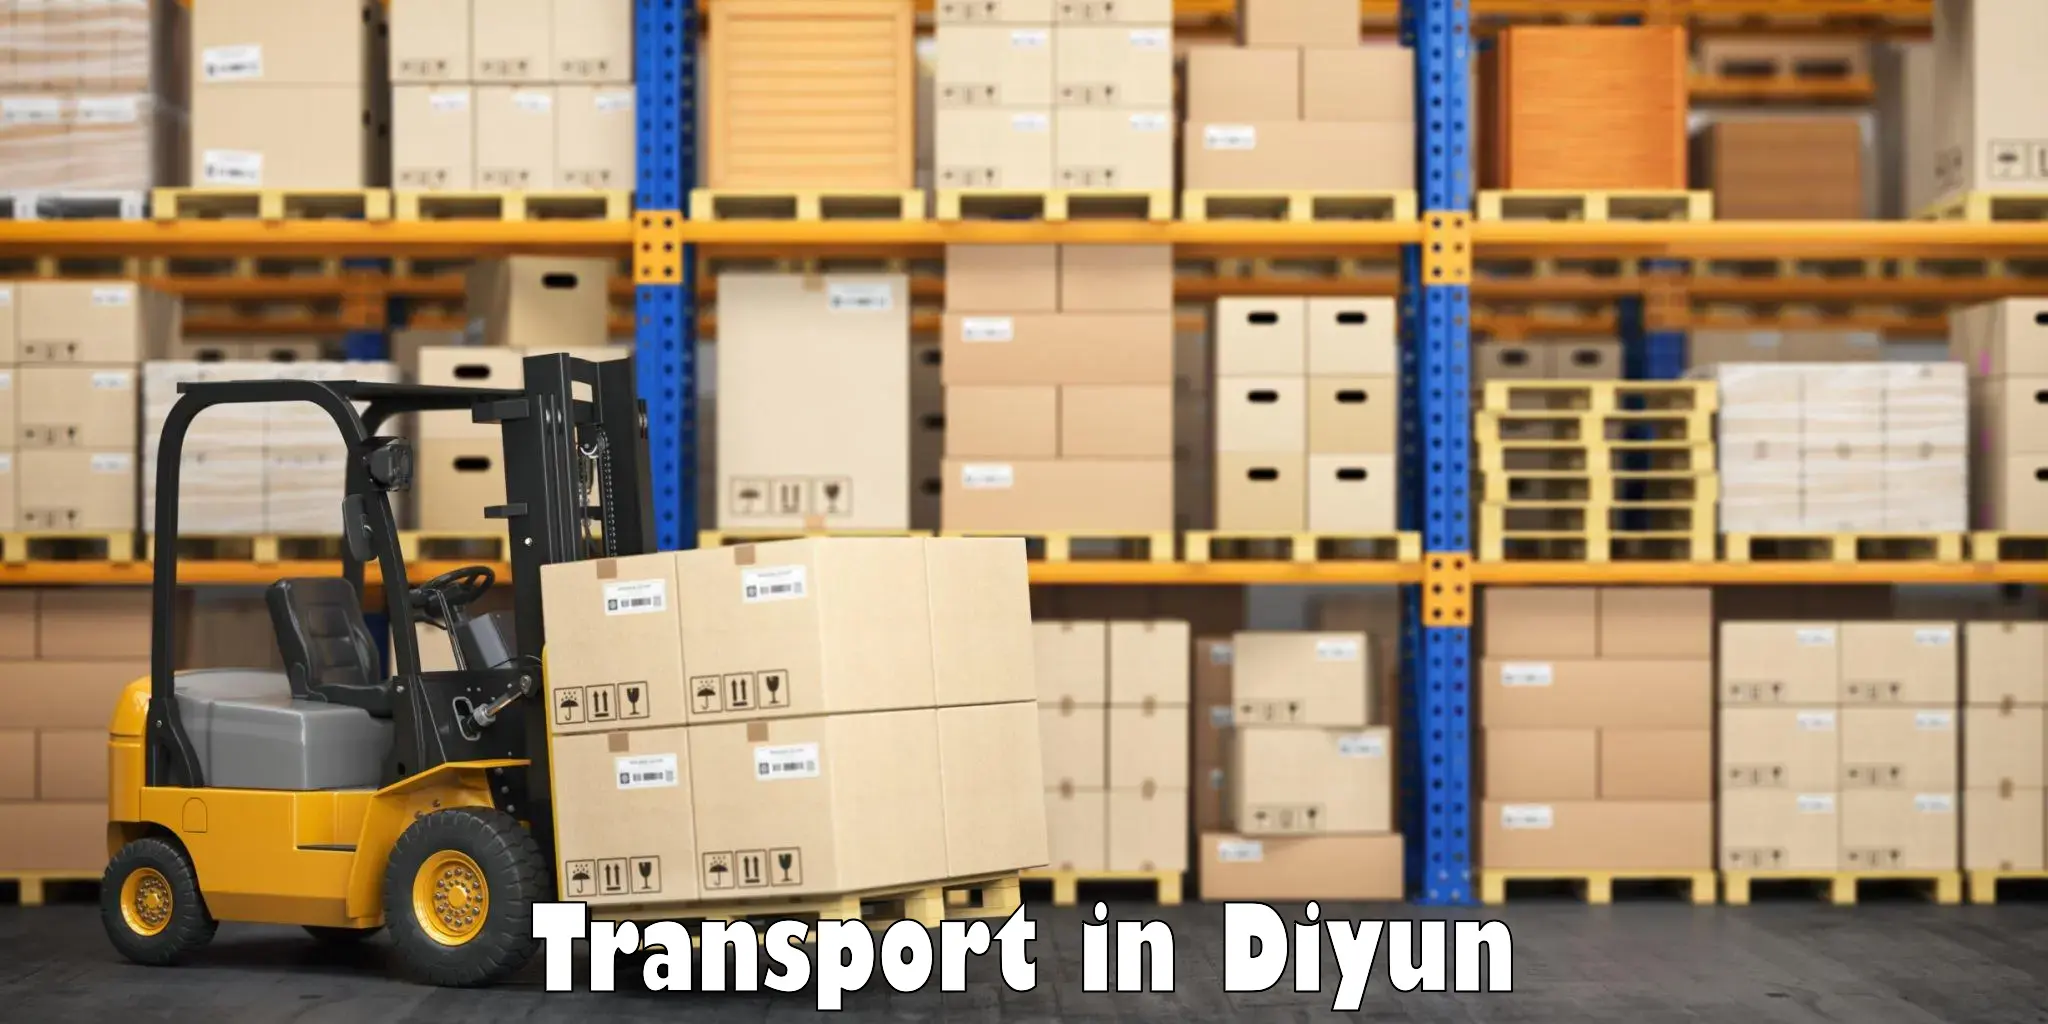 Lorry transport service in Diyun